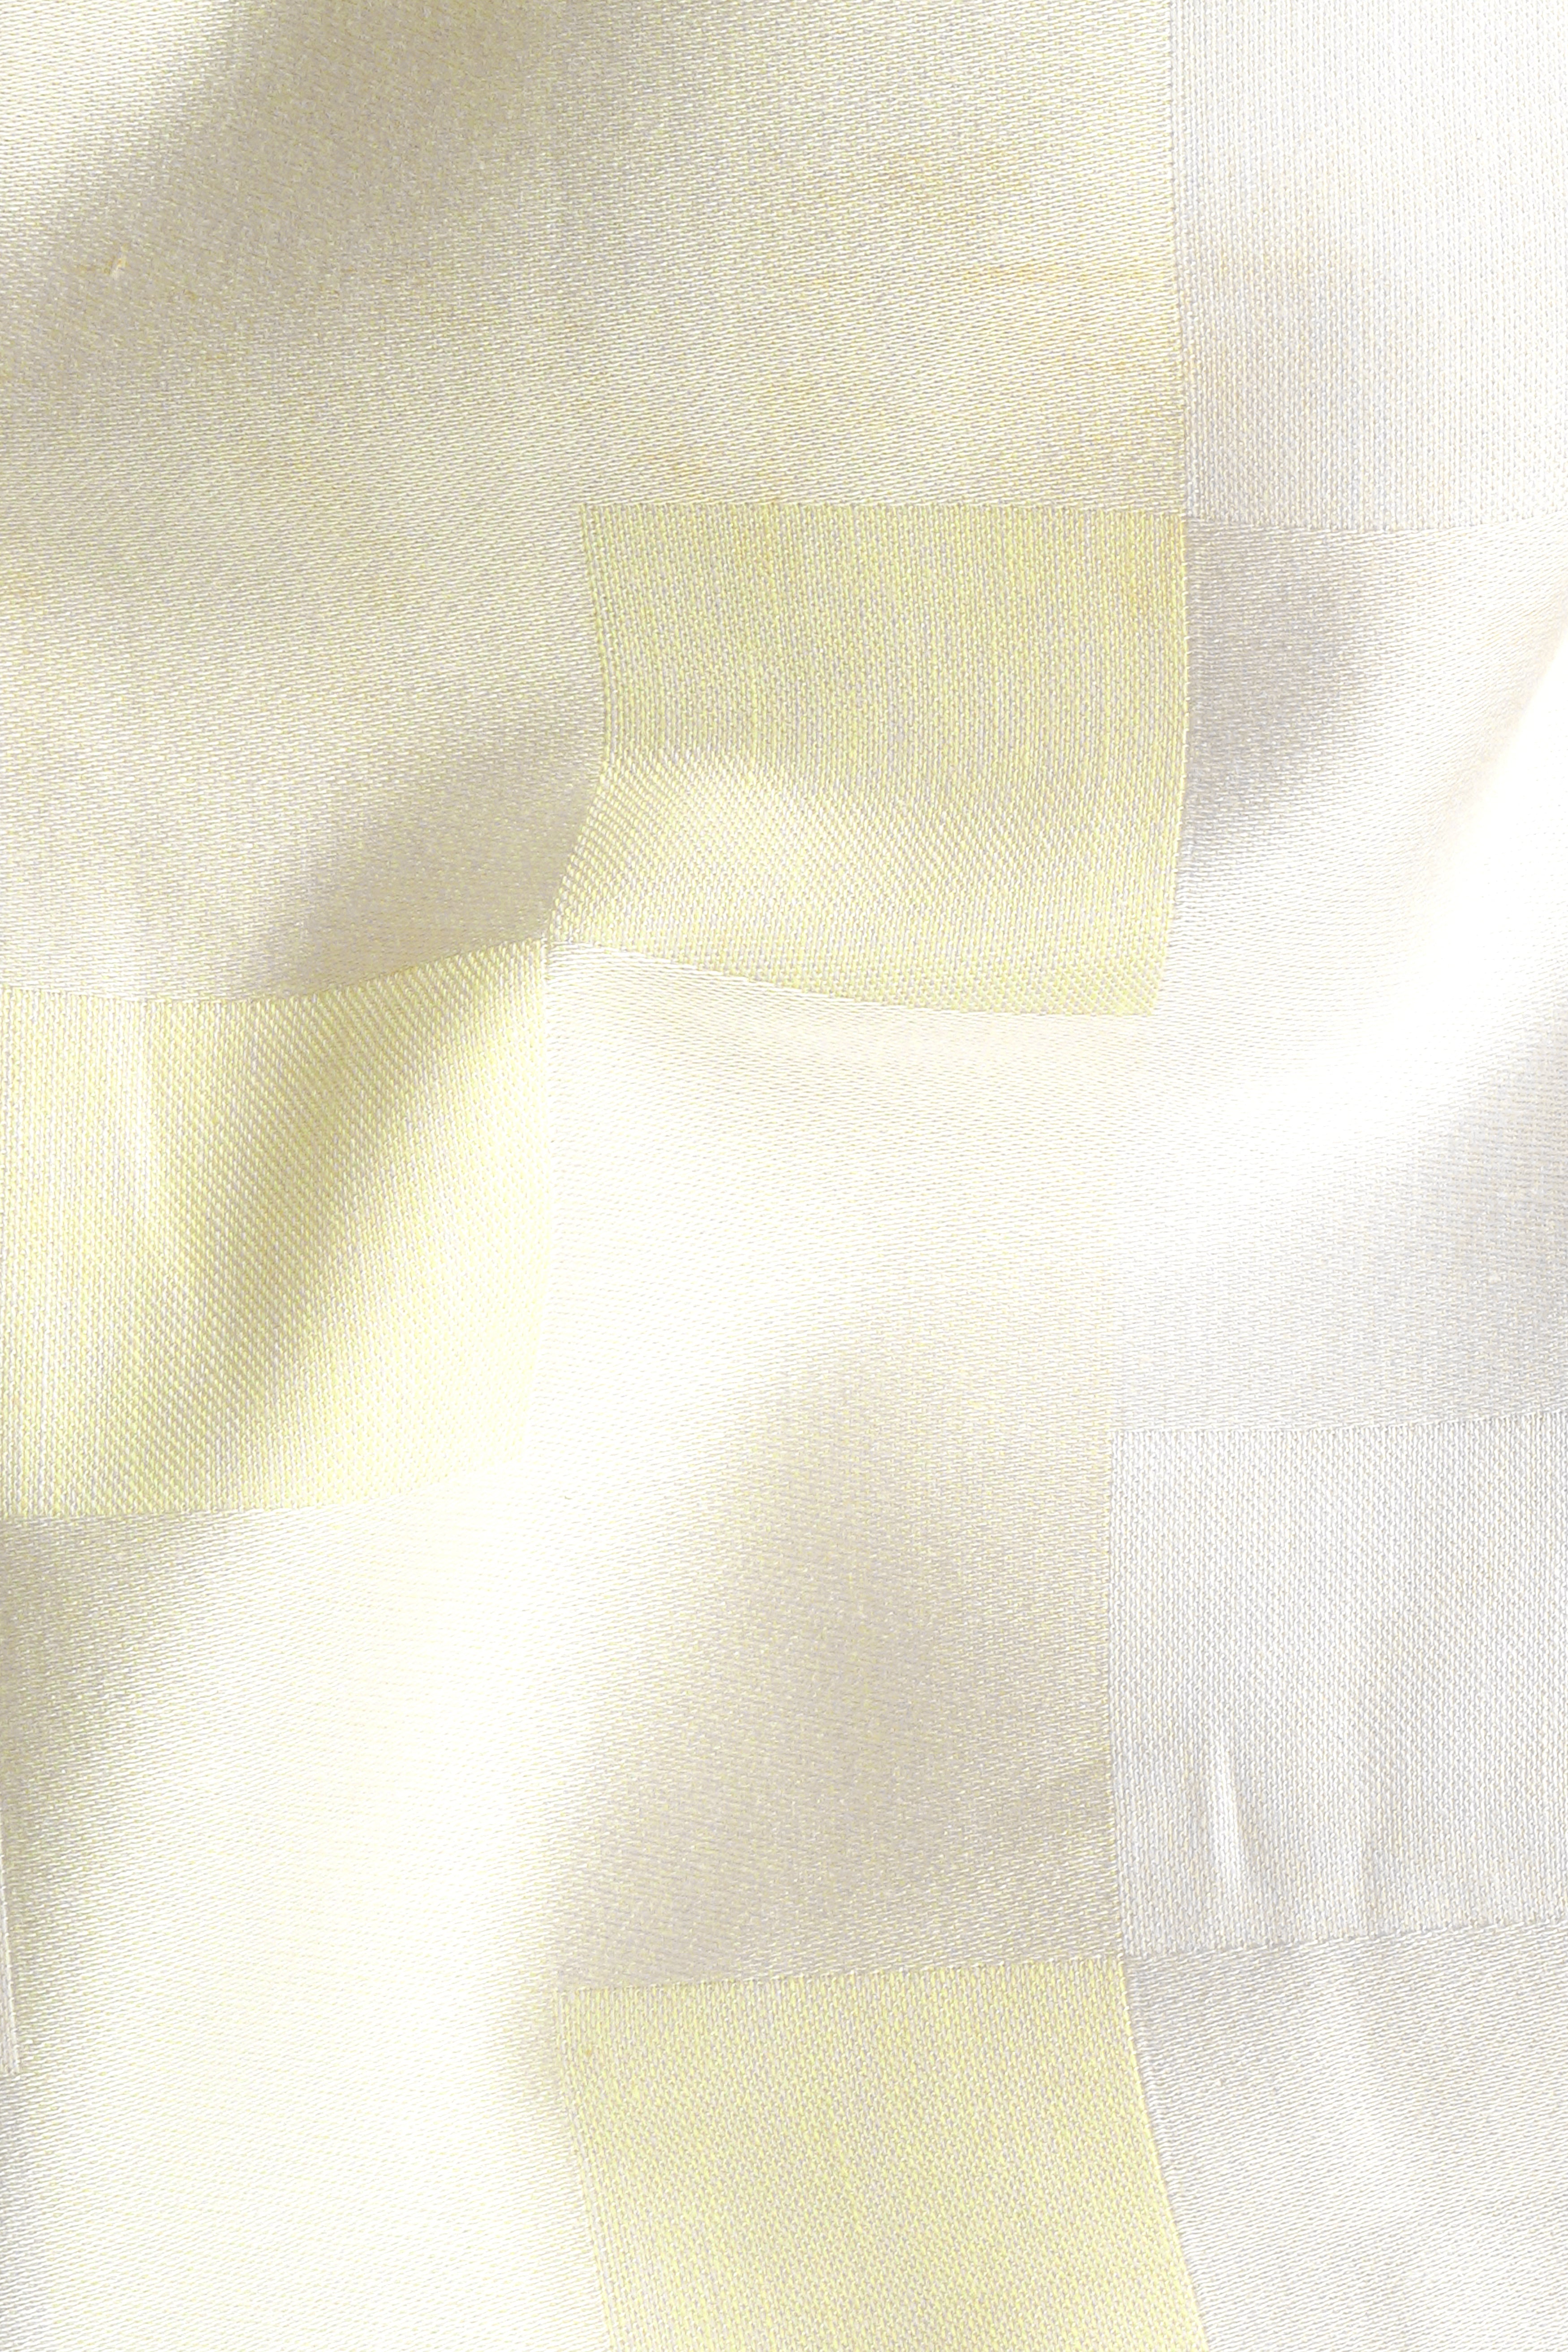 Eggshell Cream with Primrose Yellow Jacquard Textured Premium Cotton Shirt